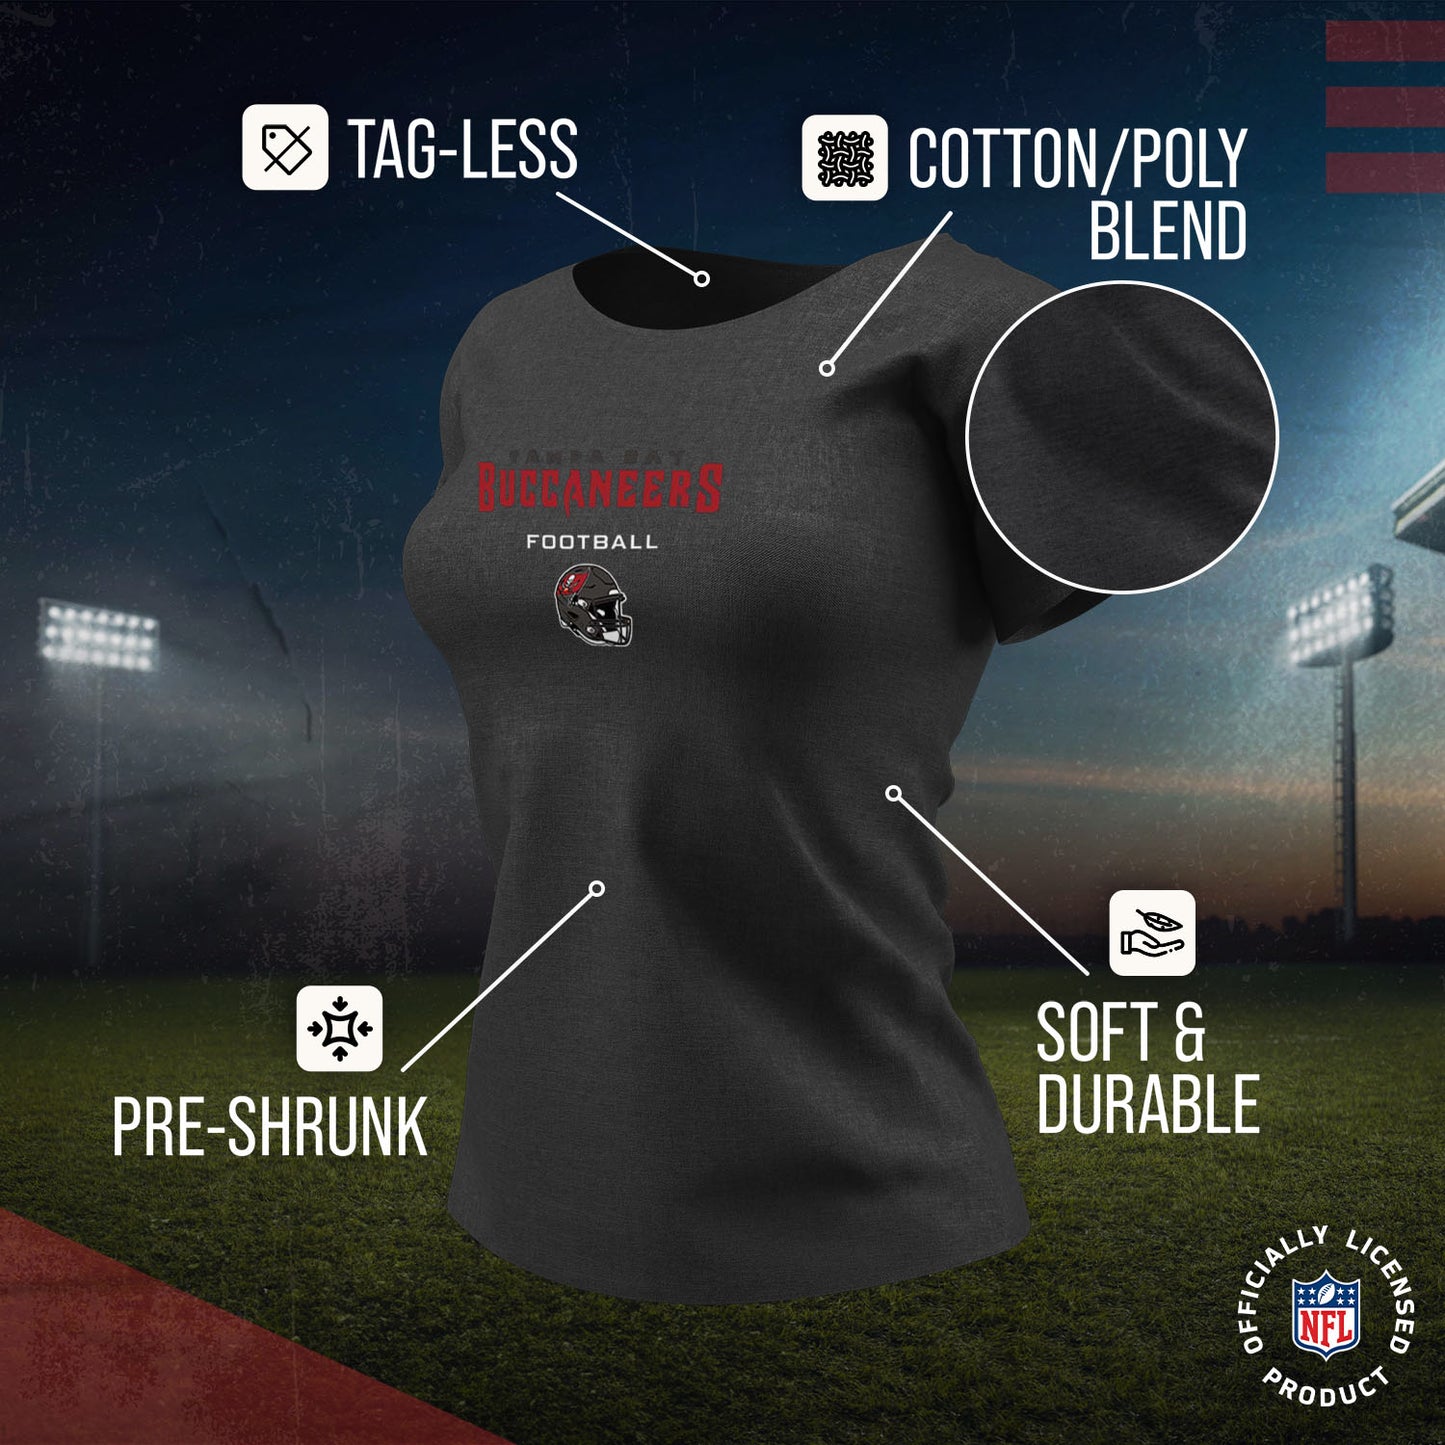 Tampa Bay Buccaneers Women's NFL Football Helmet Short Sleeve Tagless T-Shirt - Charcoal